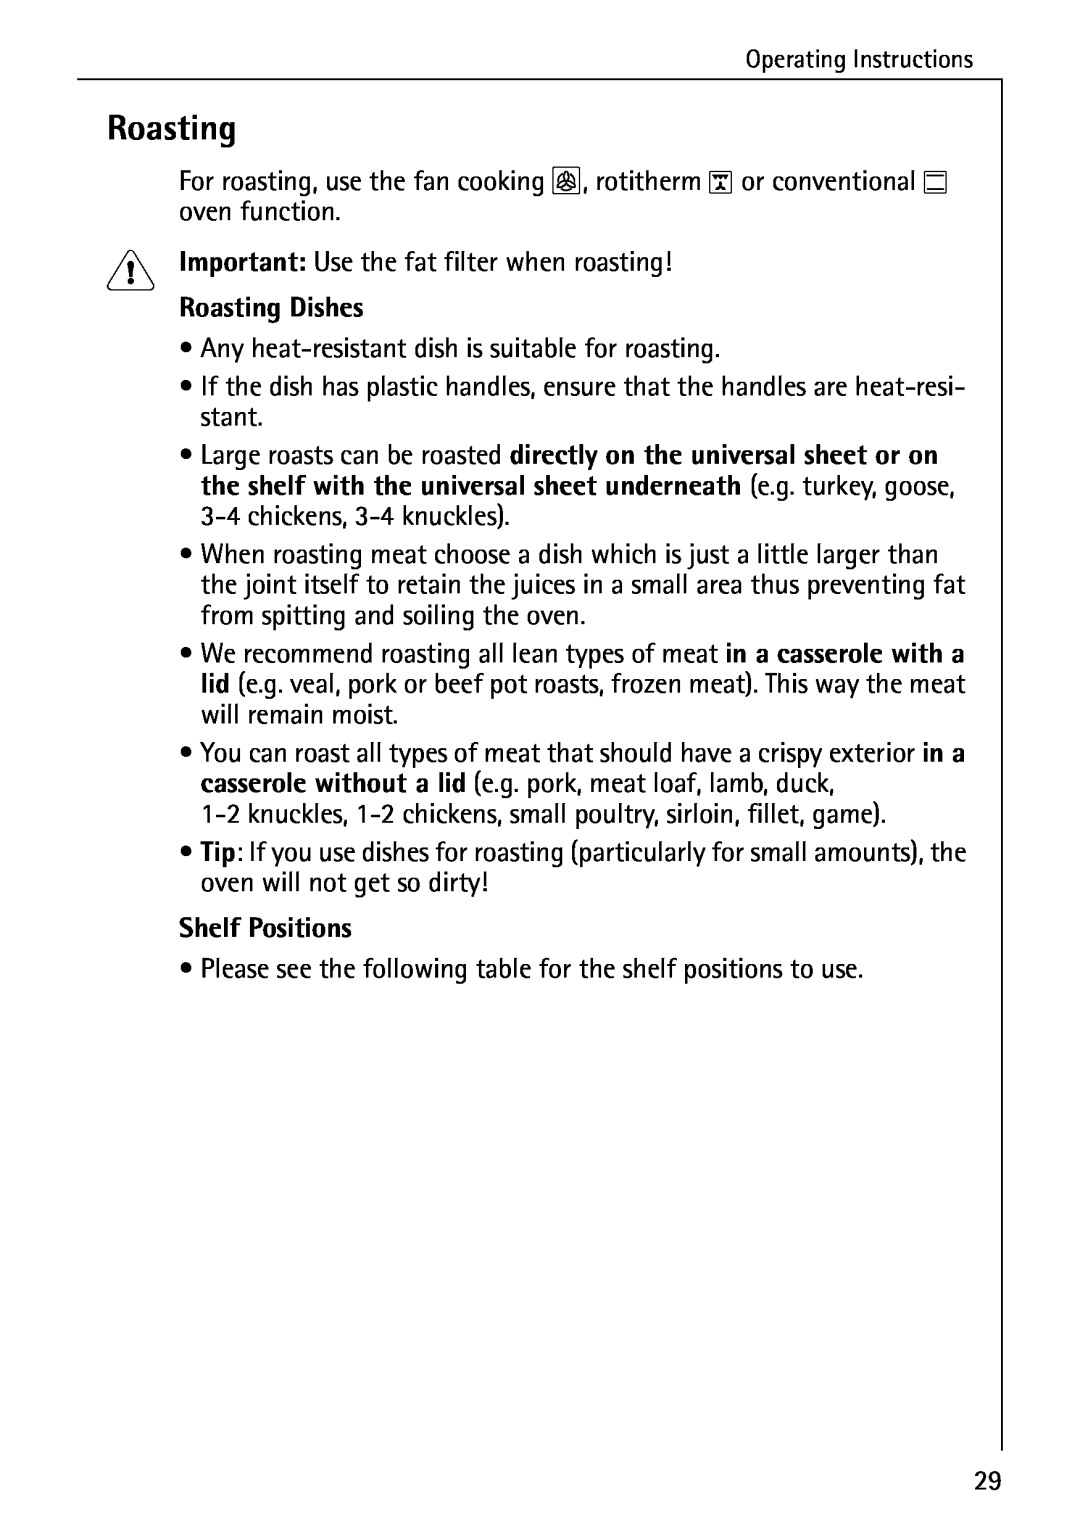 AEG B 4100 operating instructions Roasting Dishes, Shelf Positions 